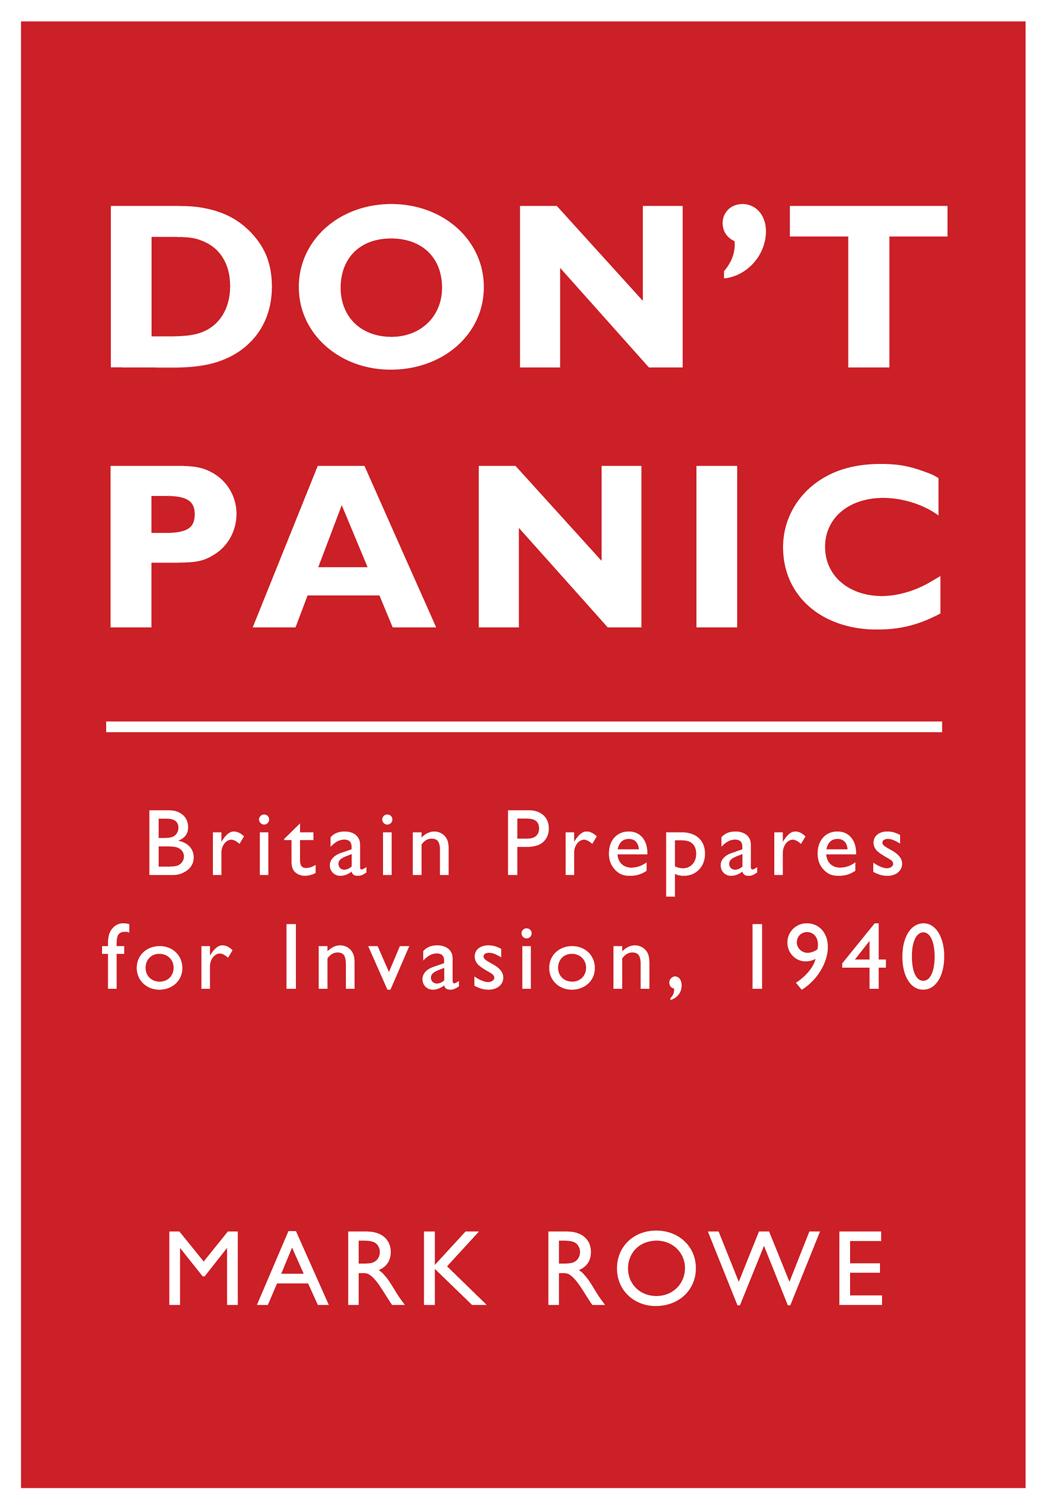 Book Don't Panic Mark Rowe